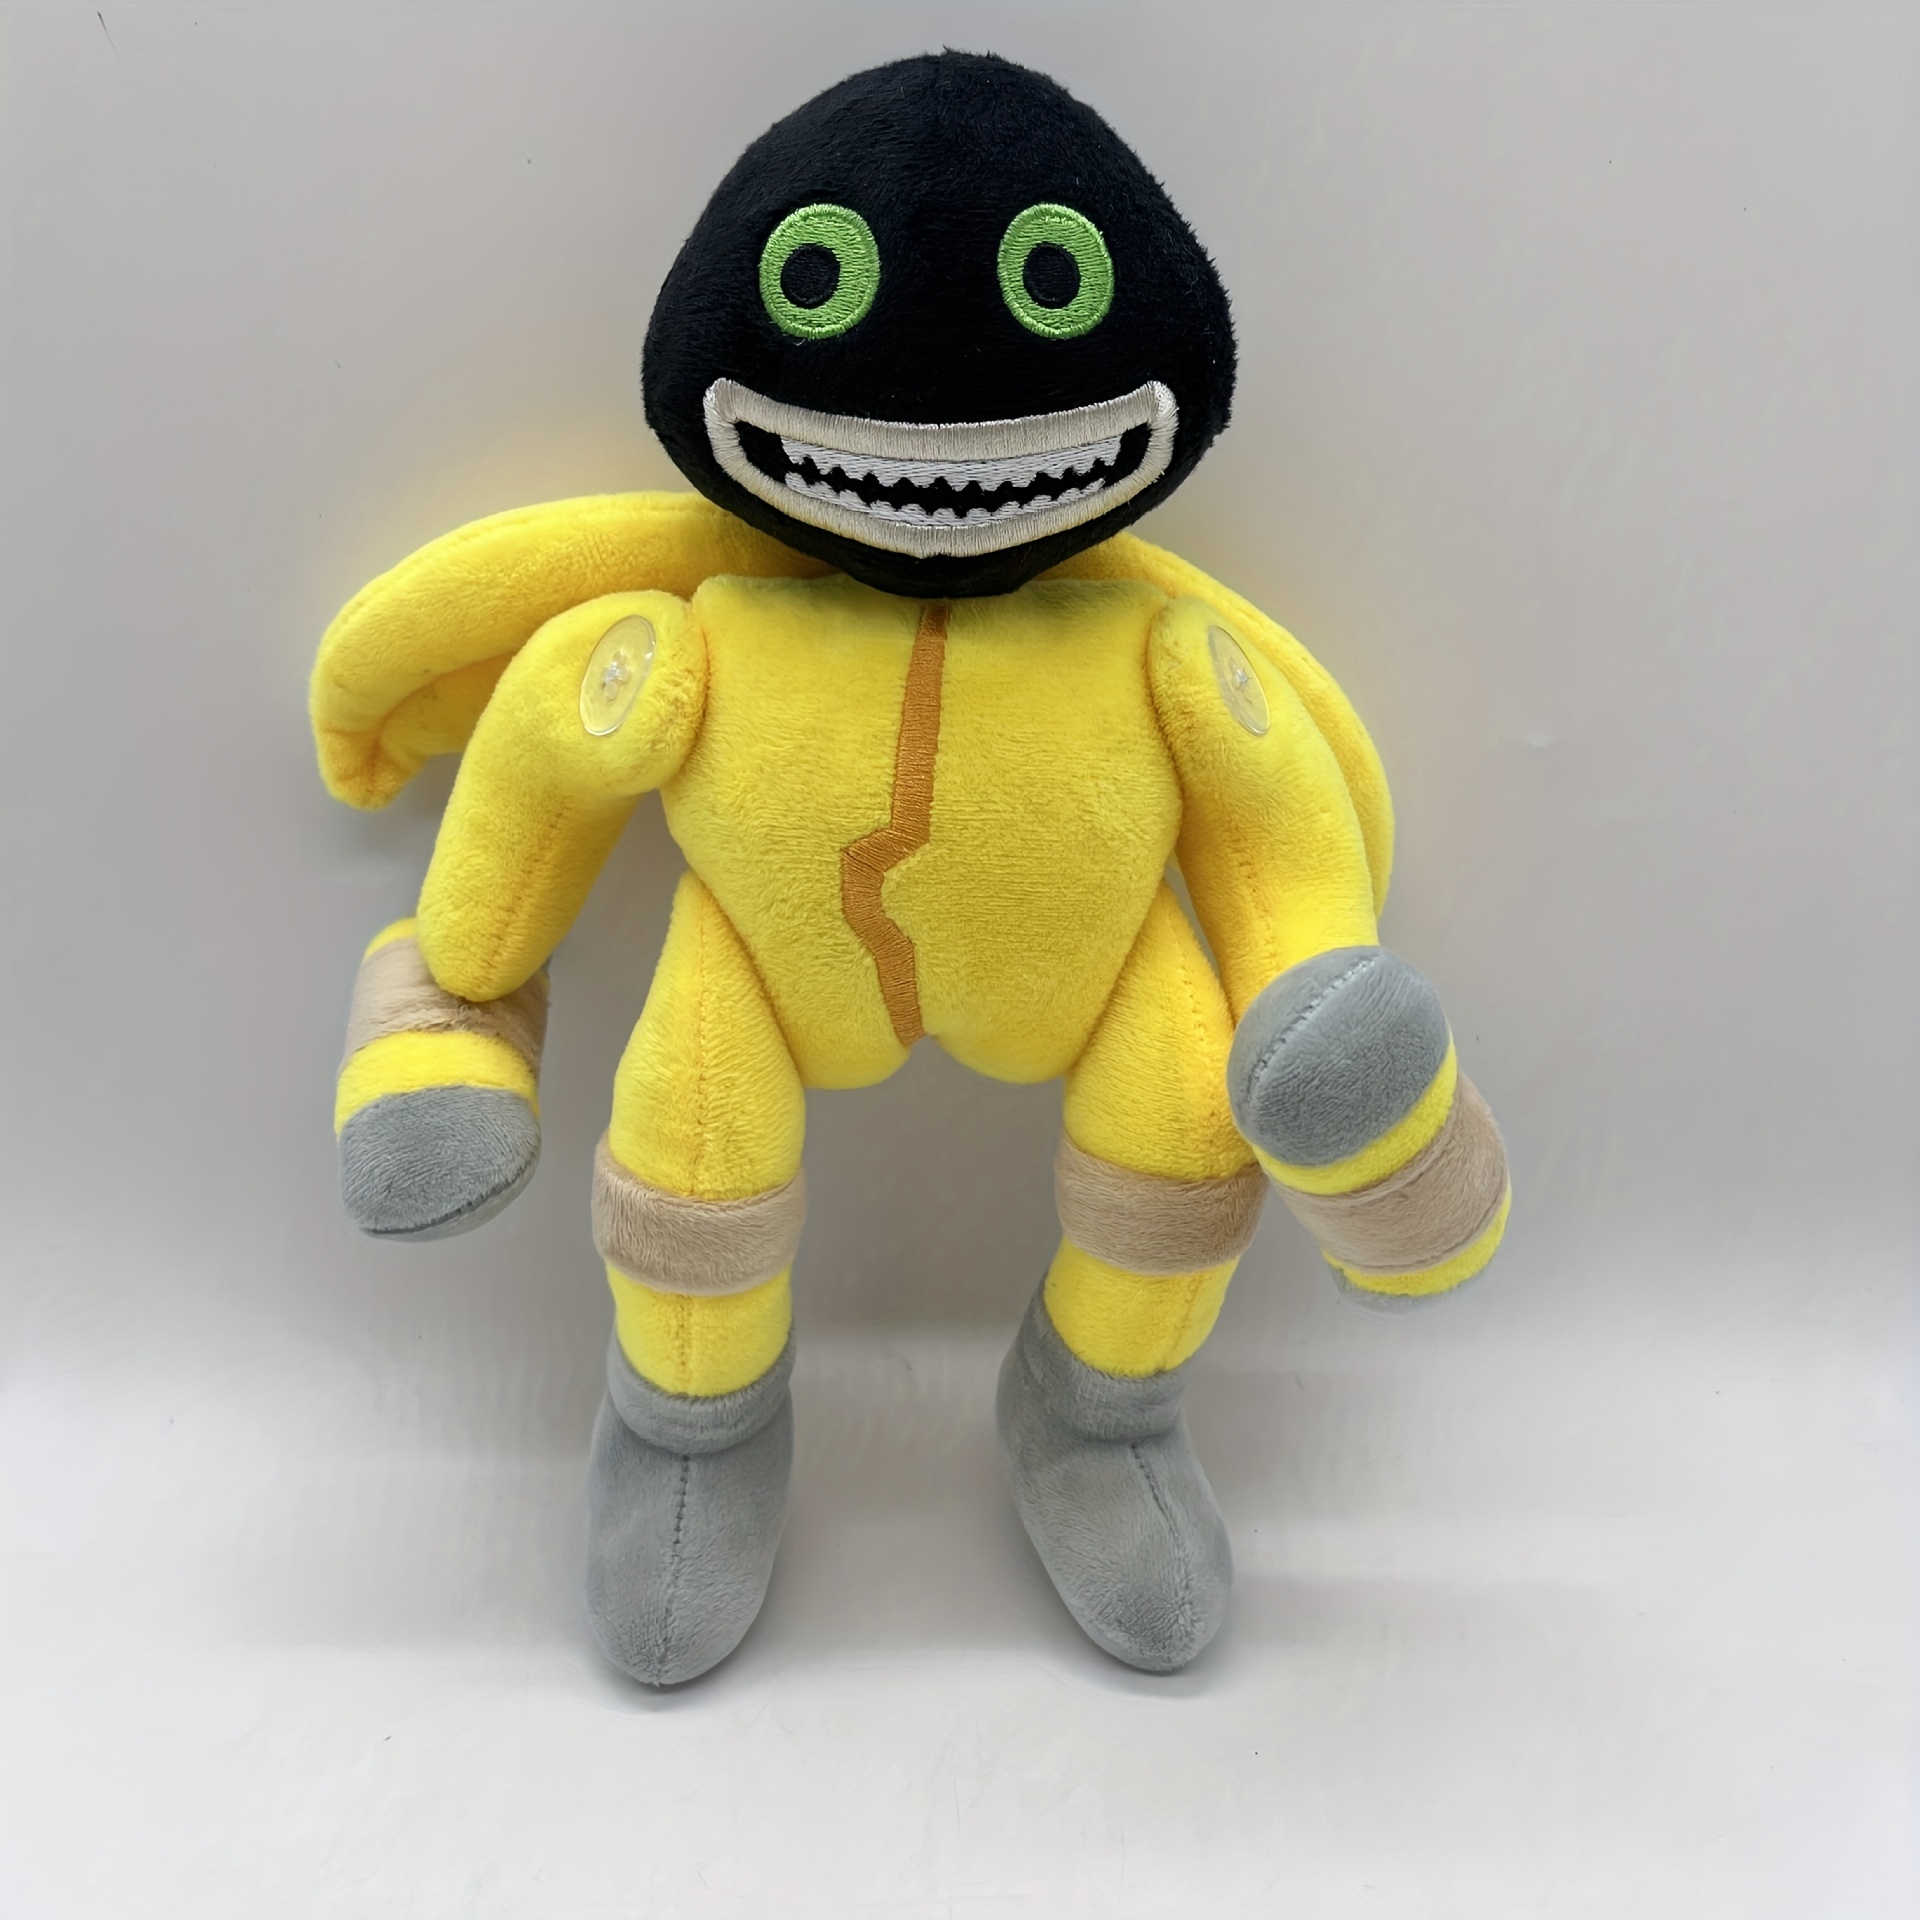  Singing Monsters Toys Building Blocks - Yellow Wubbox